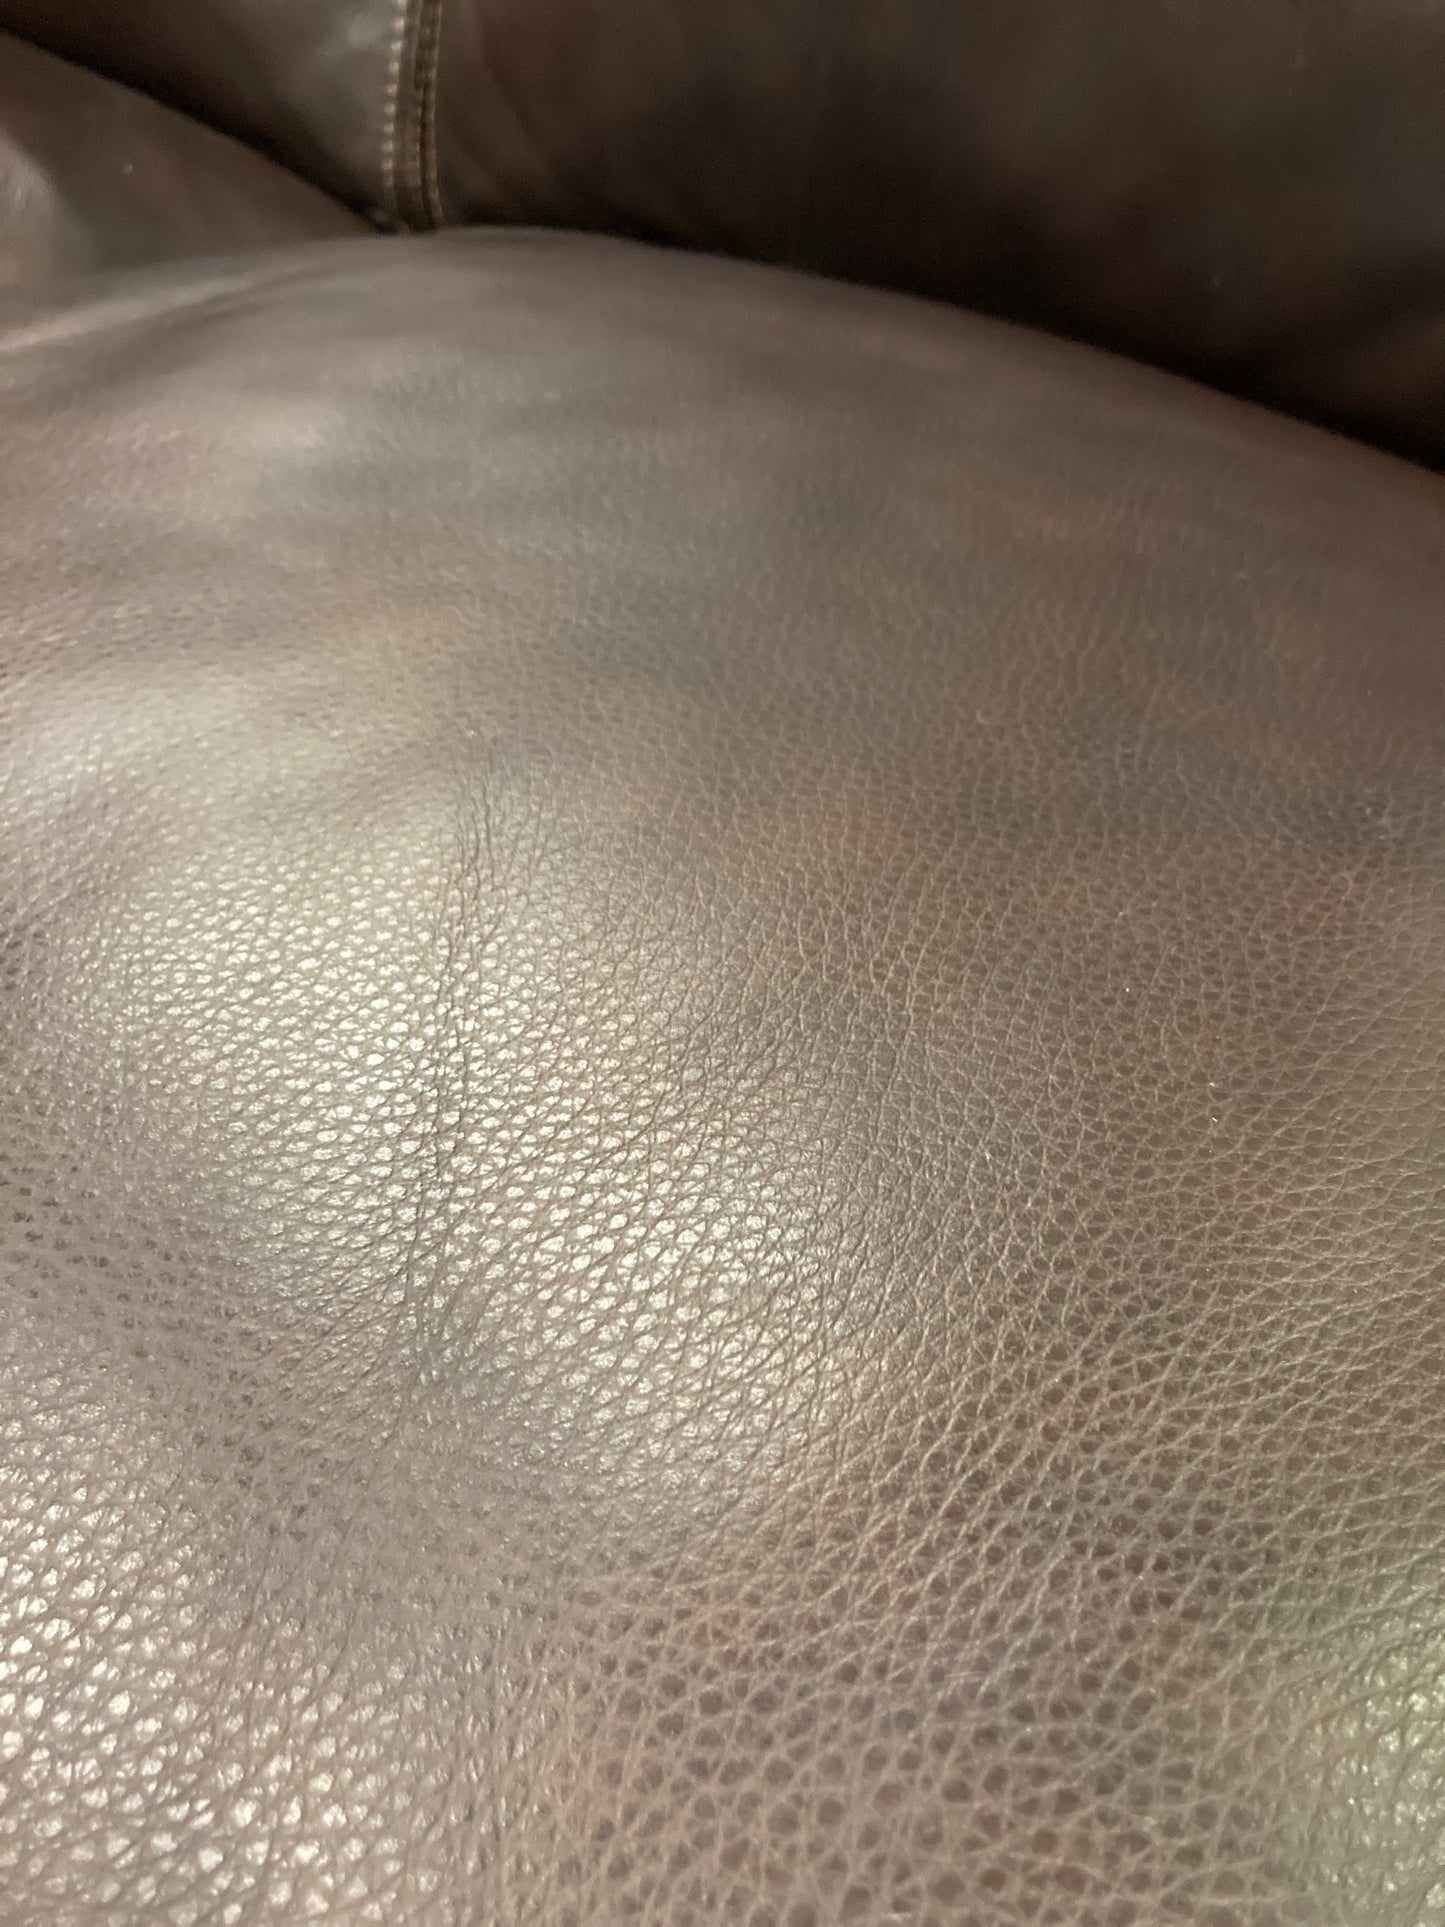 Costco - Chanton Leather Sofa - Retail $1499